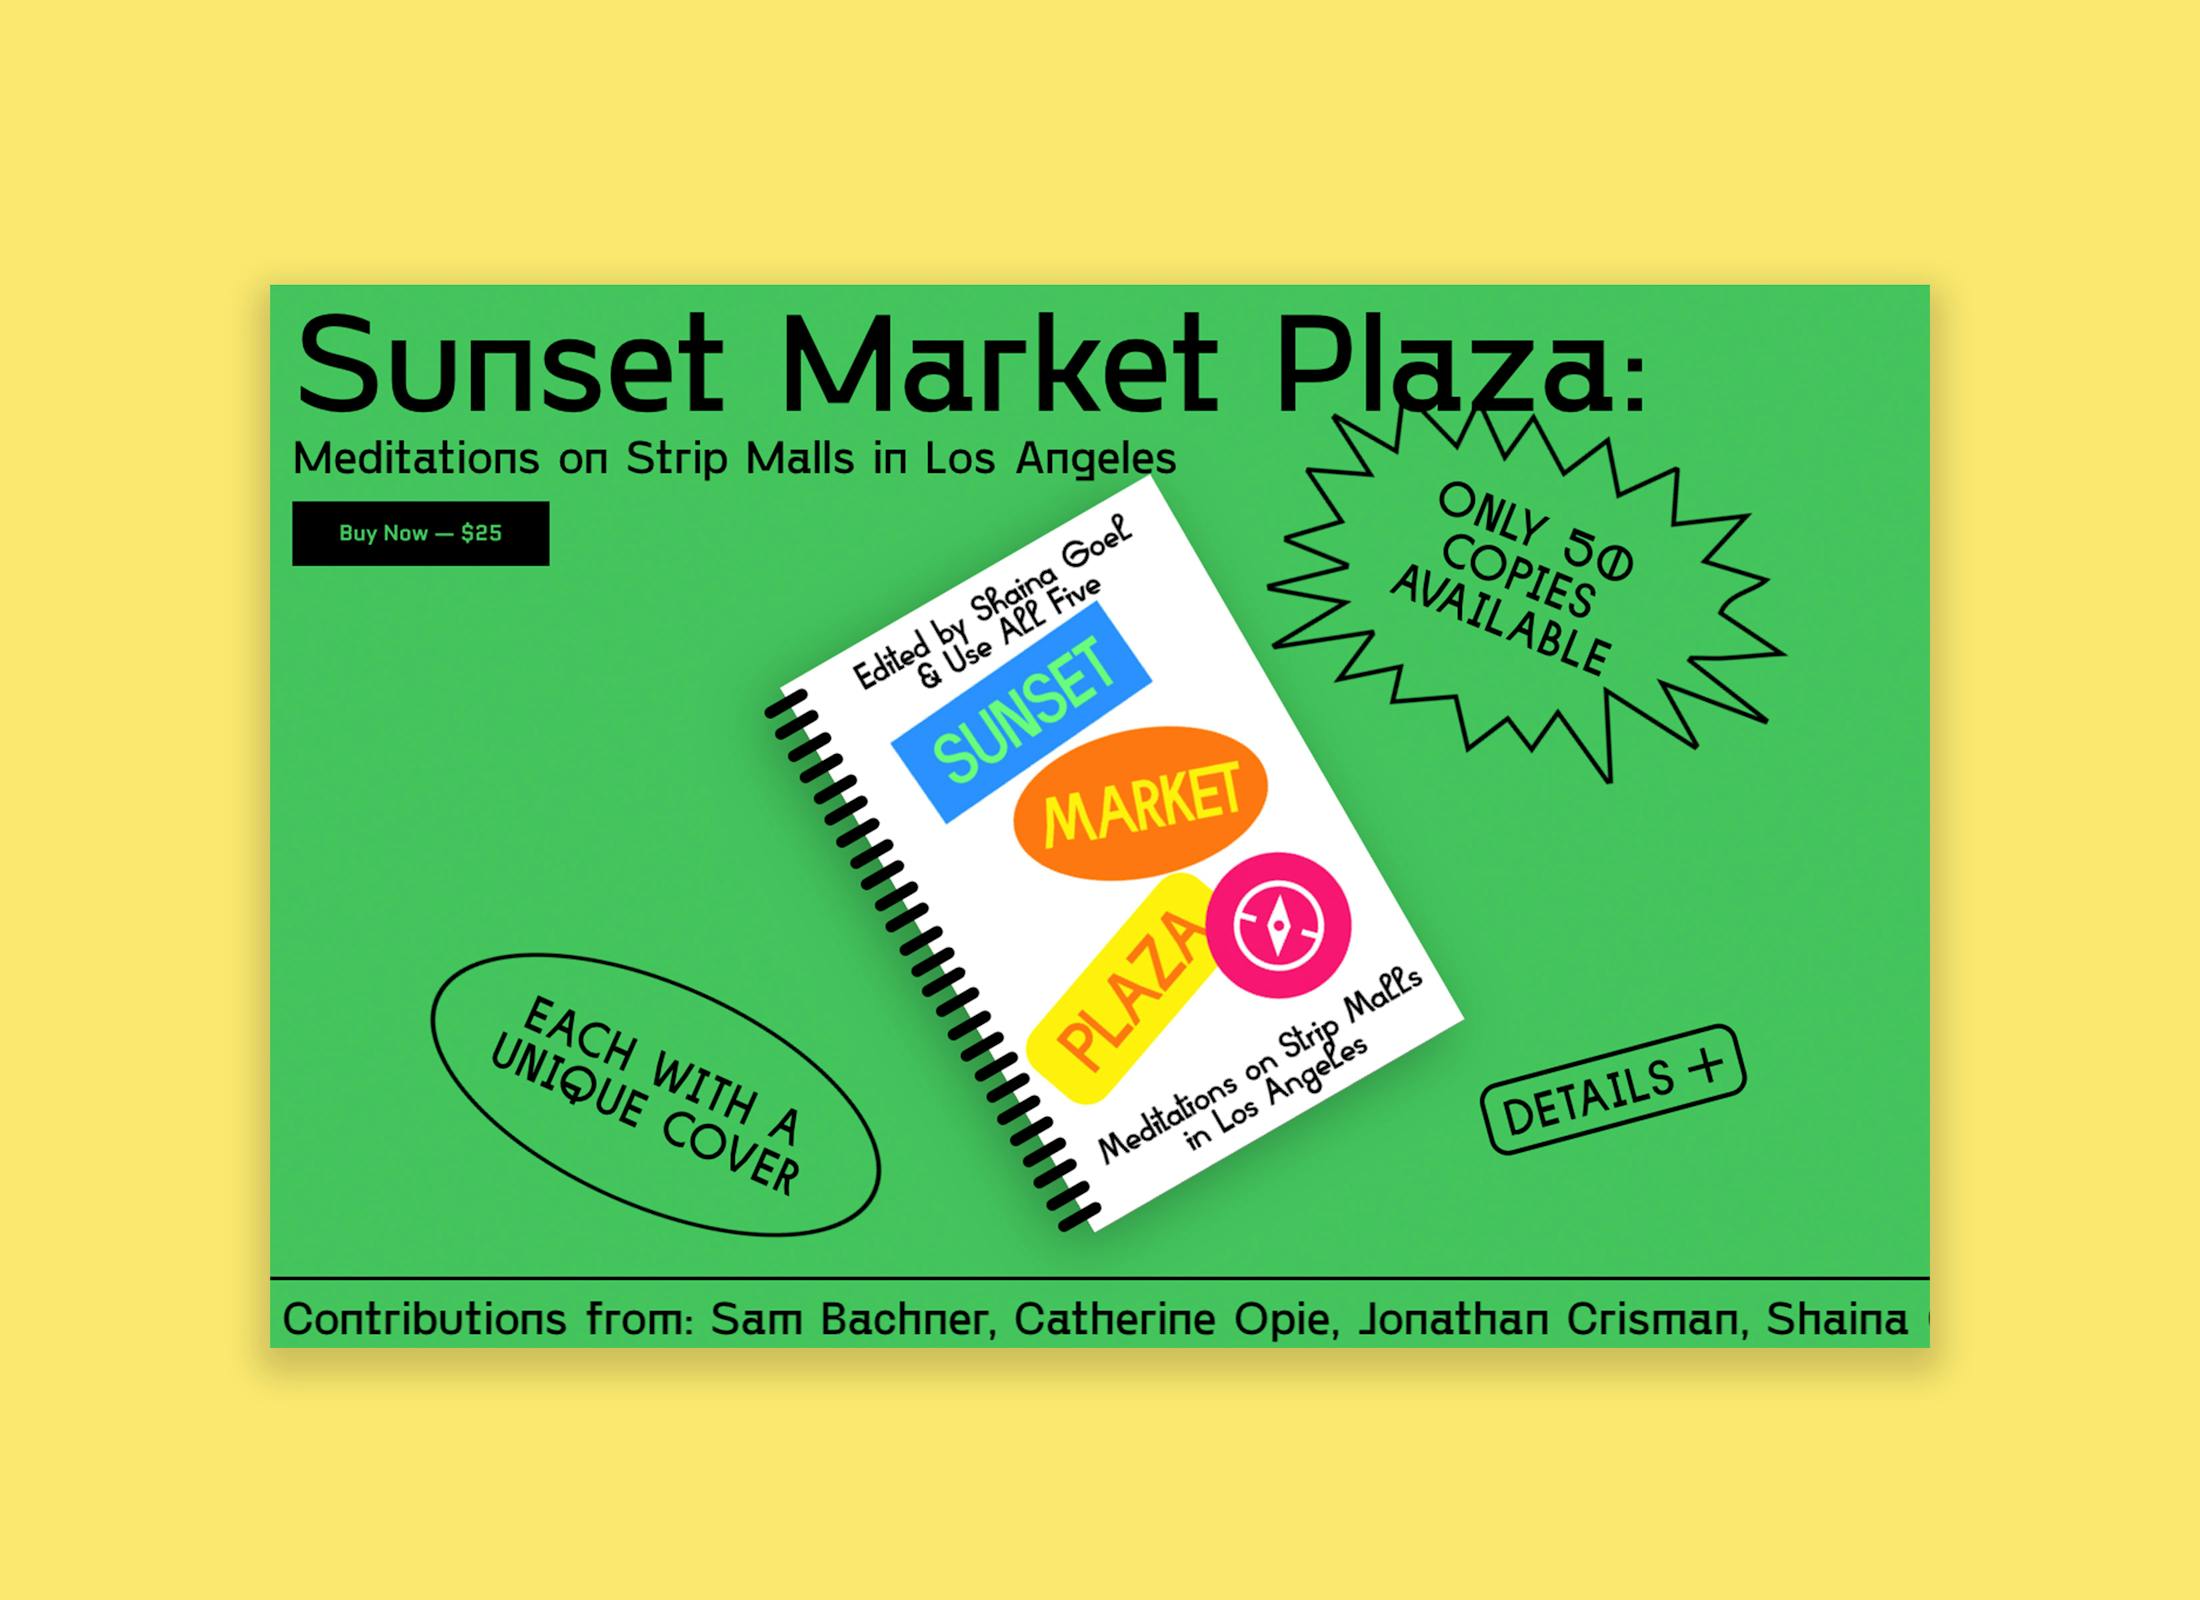 A Sunset Market Plaza poster